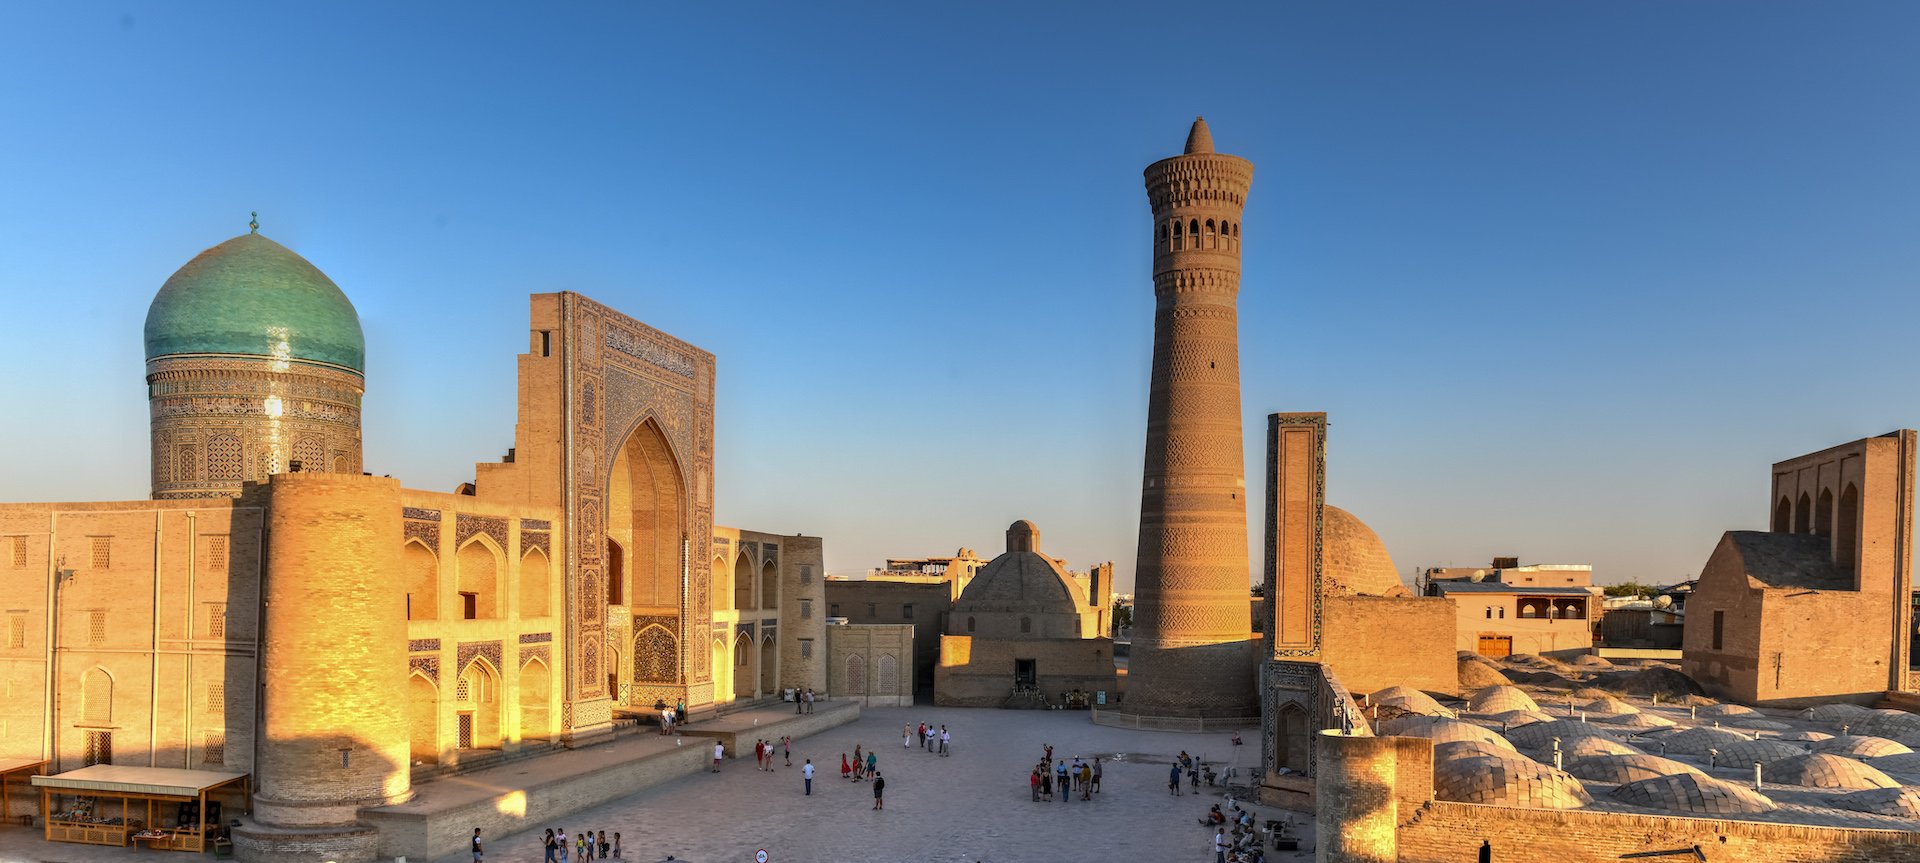 Ancient Mir-i-Arab Madrasa - Bukhara, Uzbekistan.jpg